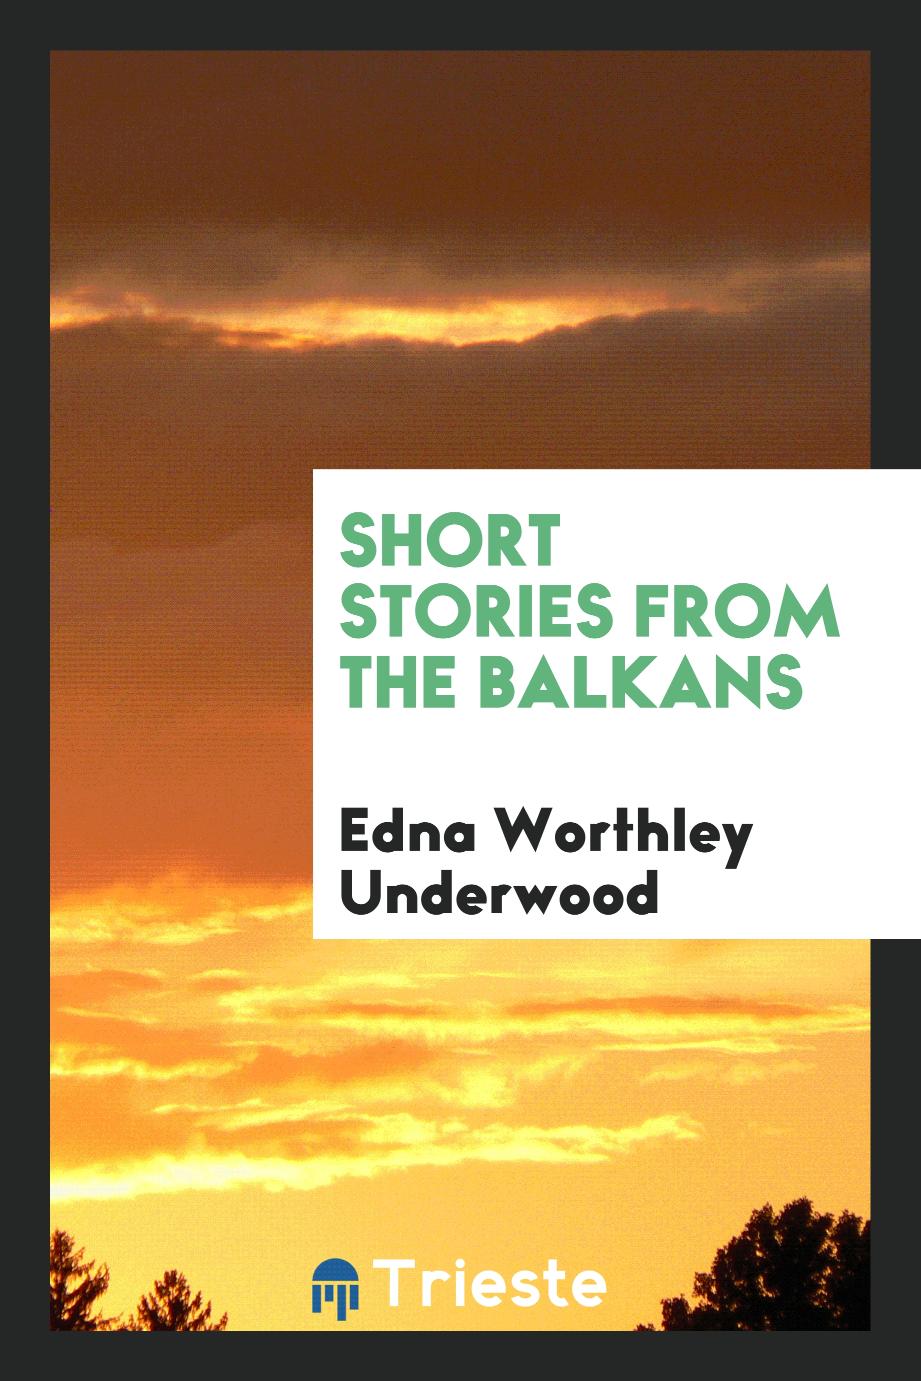 Short stories from the Balkans